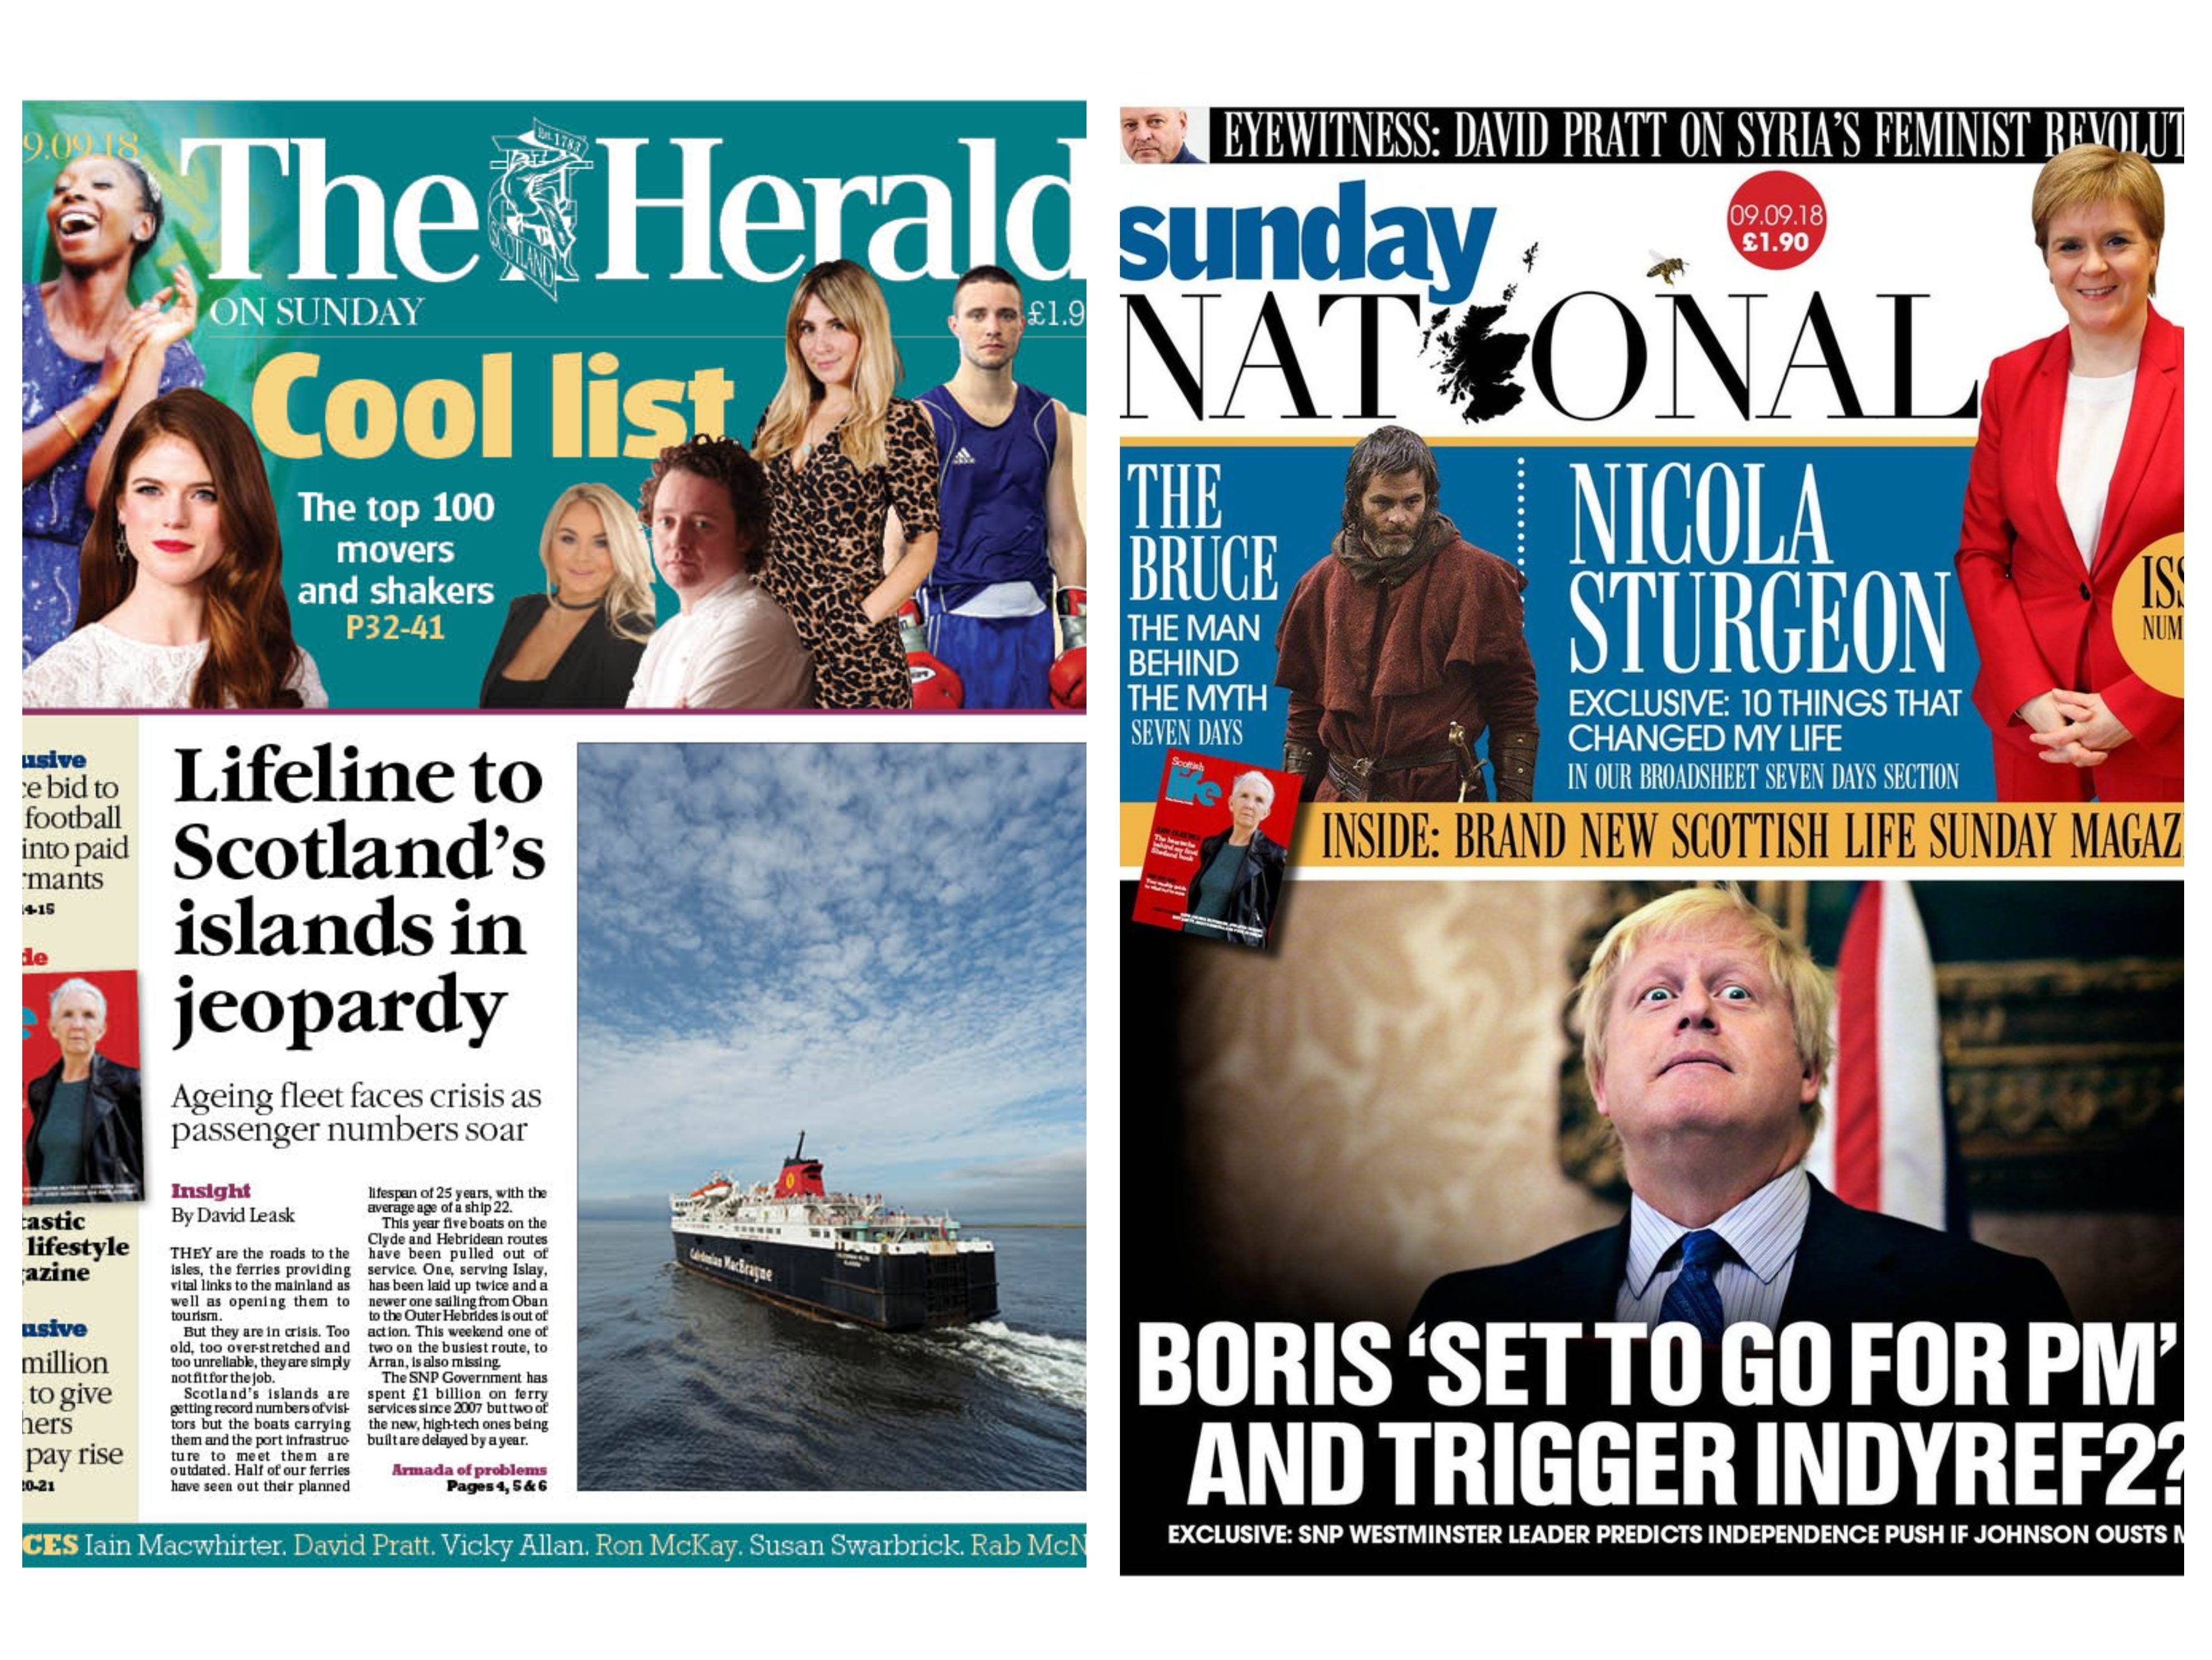 New Sunday Scottish titles Sunday National and Herald on Sunday publish first editions